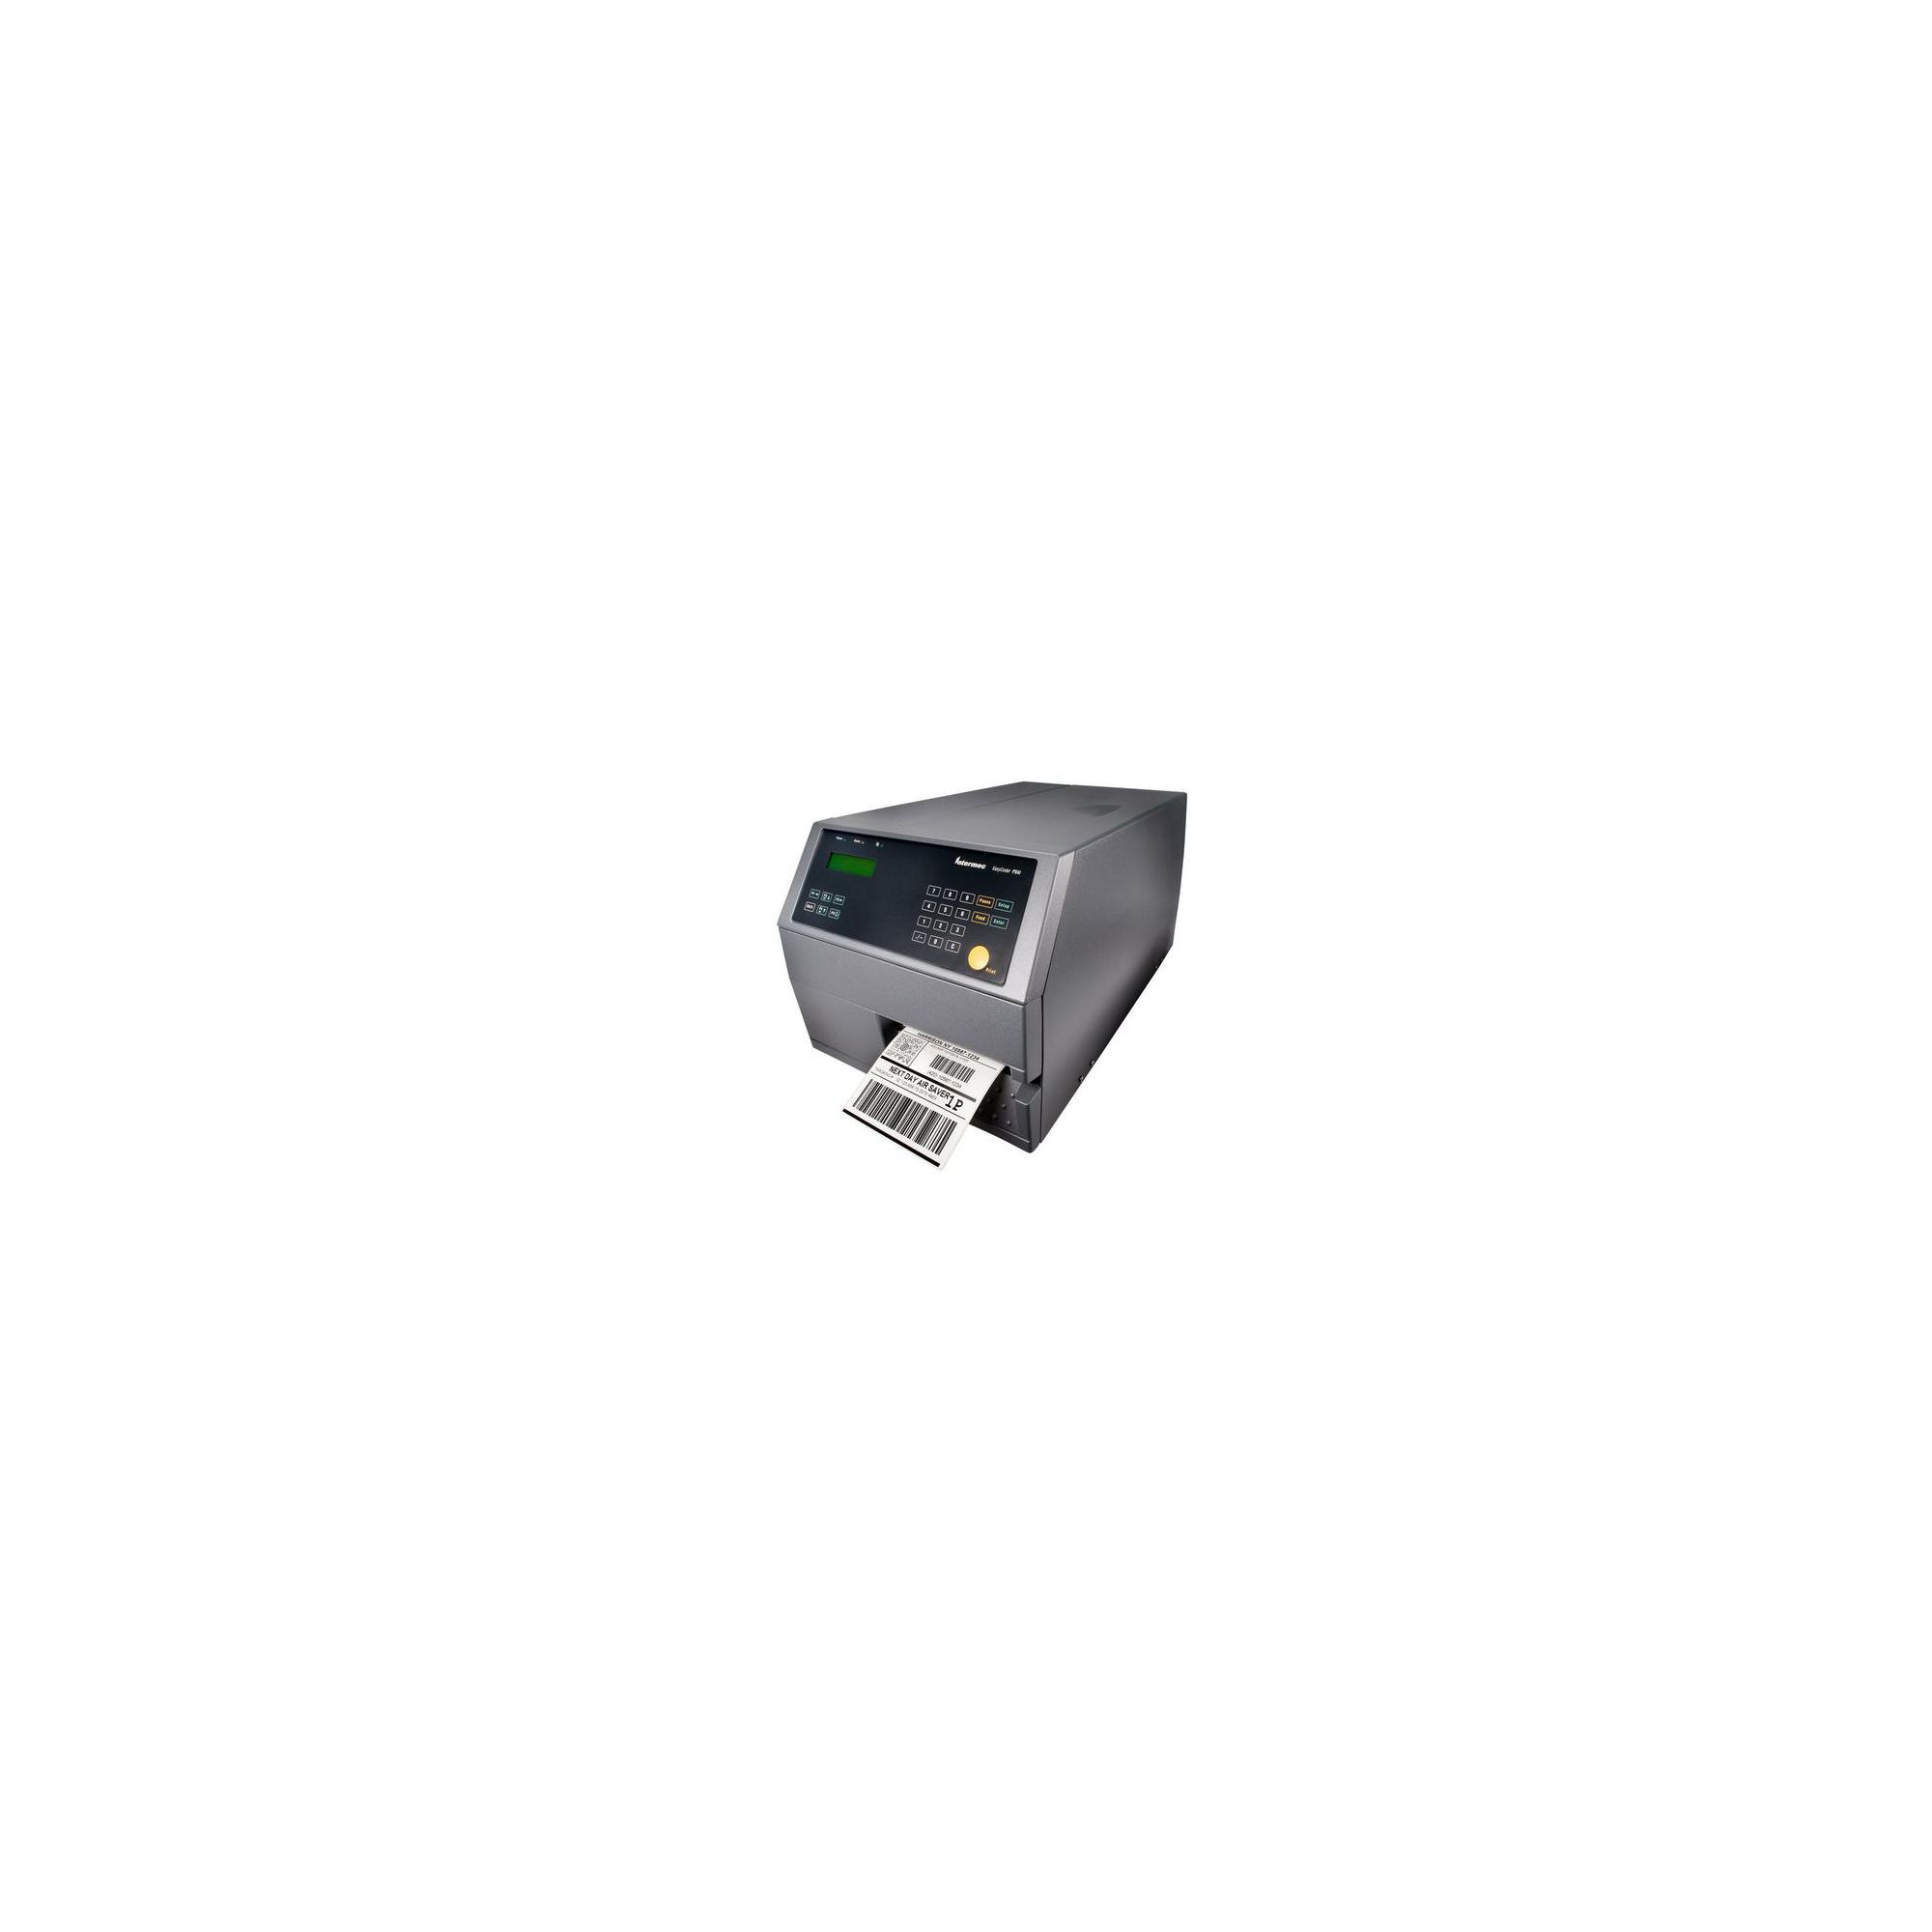 Intermec PX4i High Performance Printer at Tesco Direct